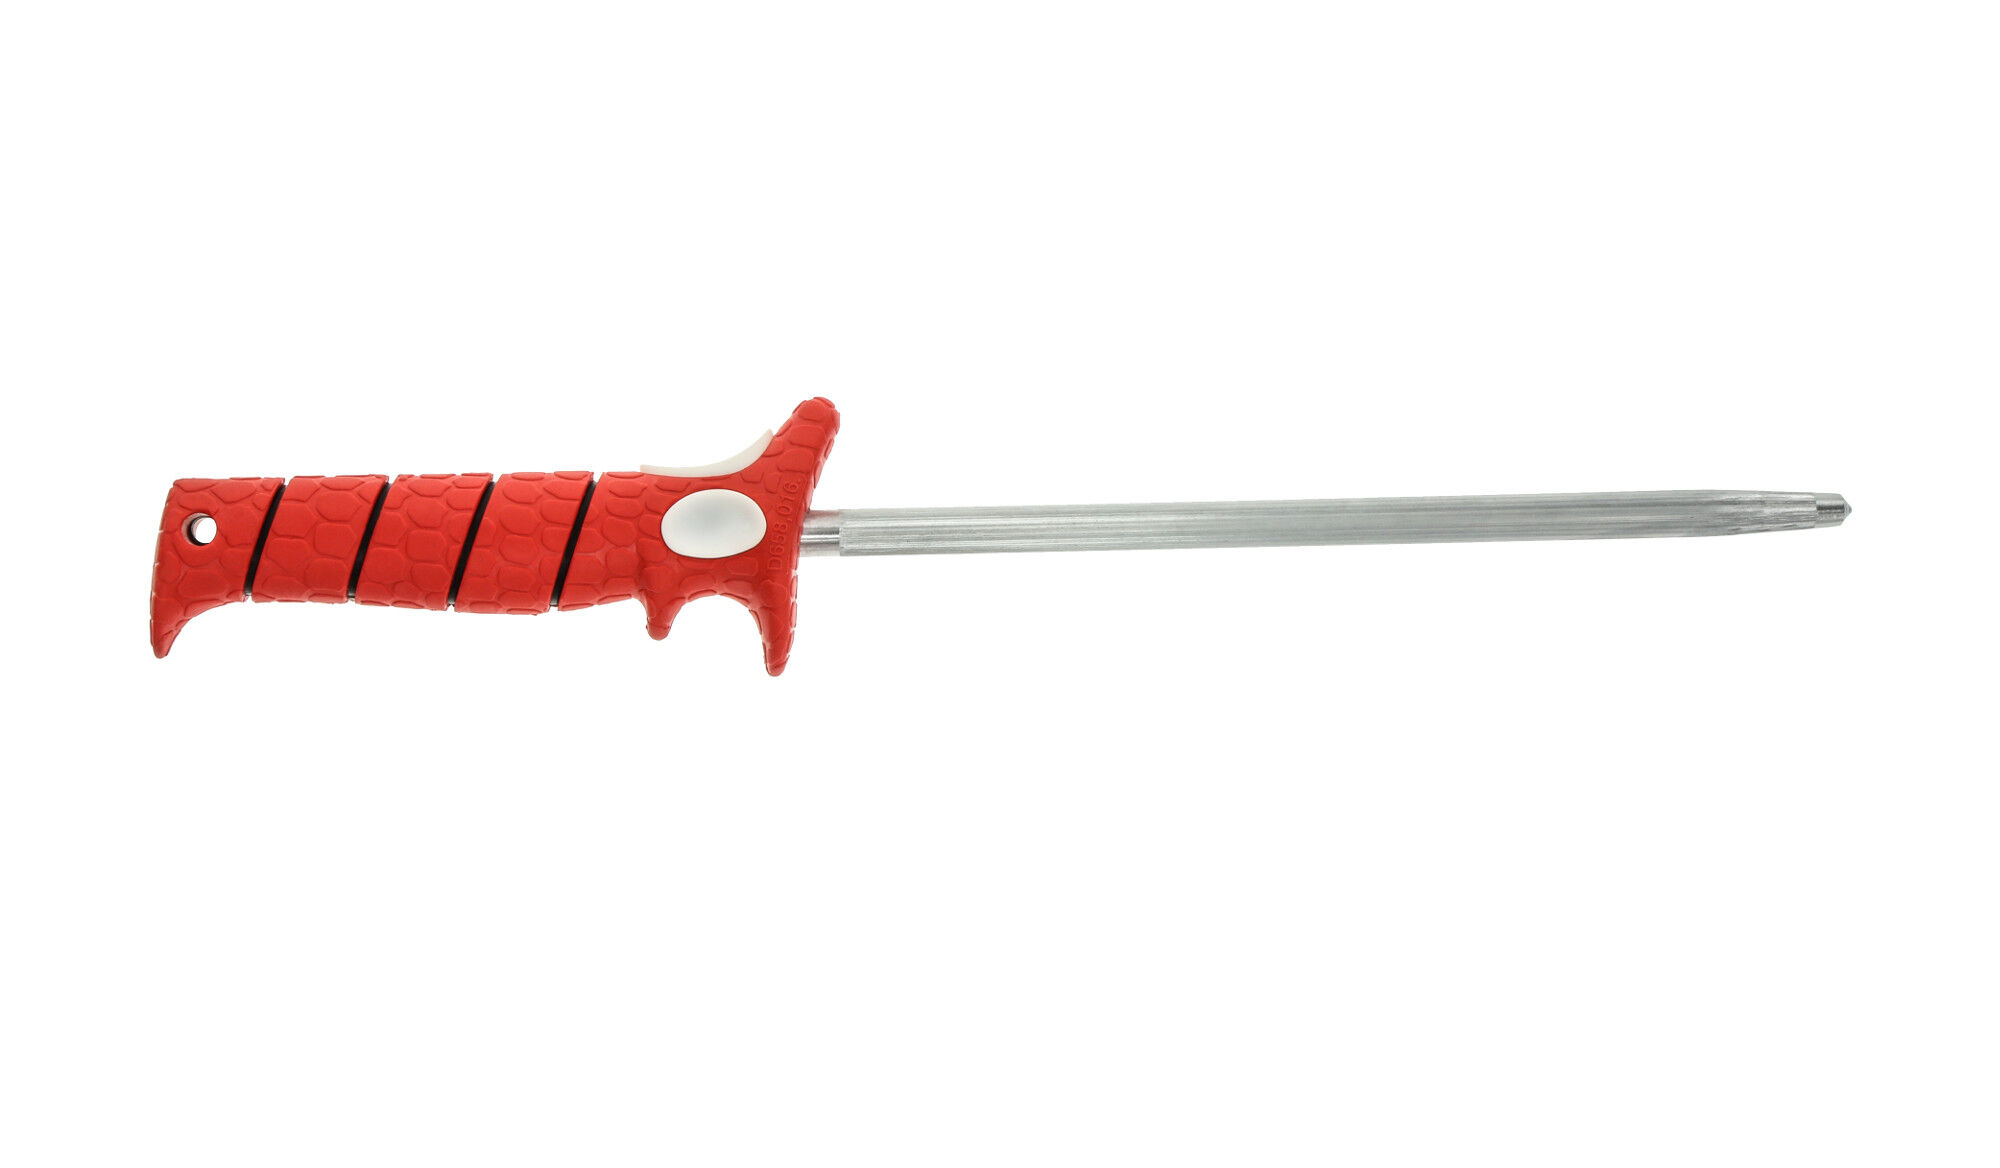 Sharpal 120H 10 inch Professional Kitchen Knife Sharpening Honing Steel Sharpener Rod Restore Blade Quickly